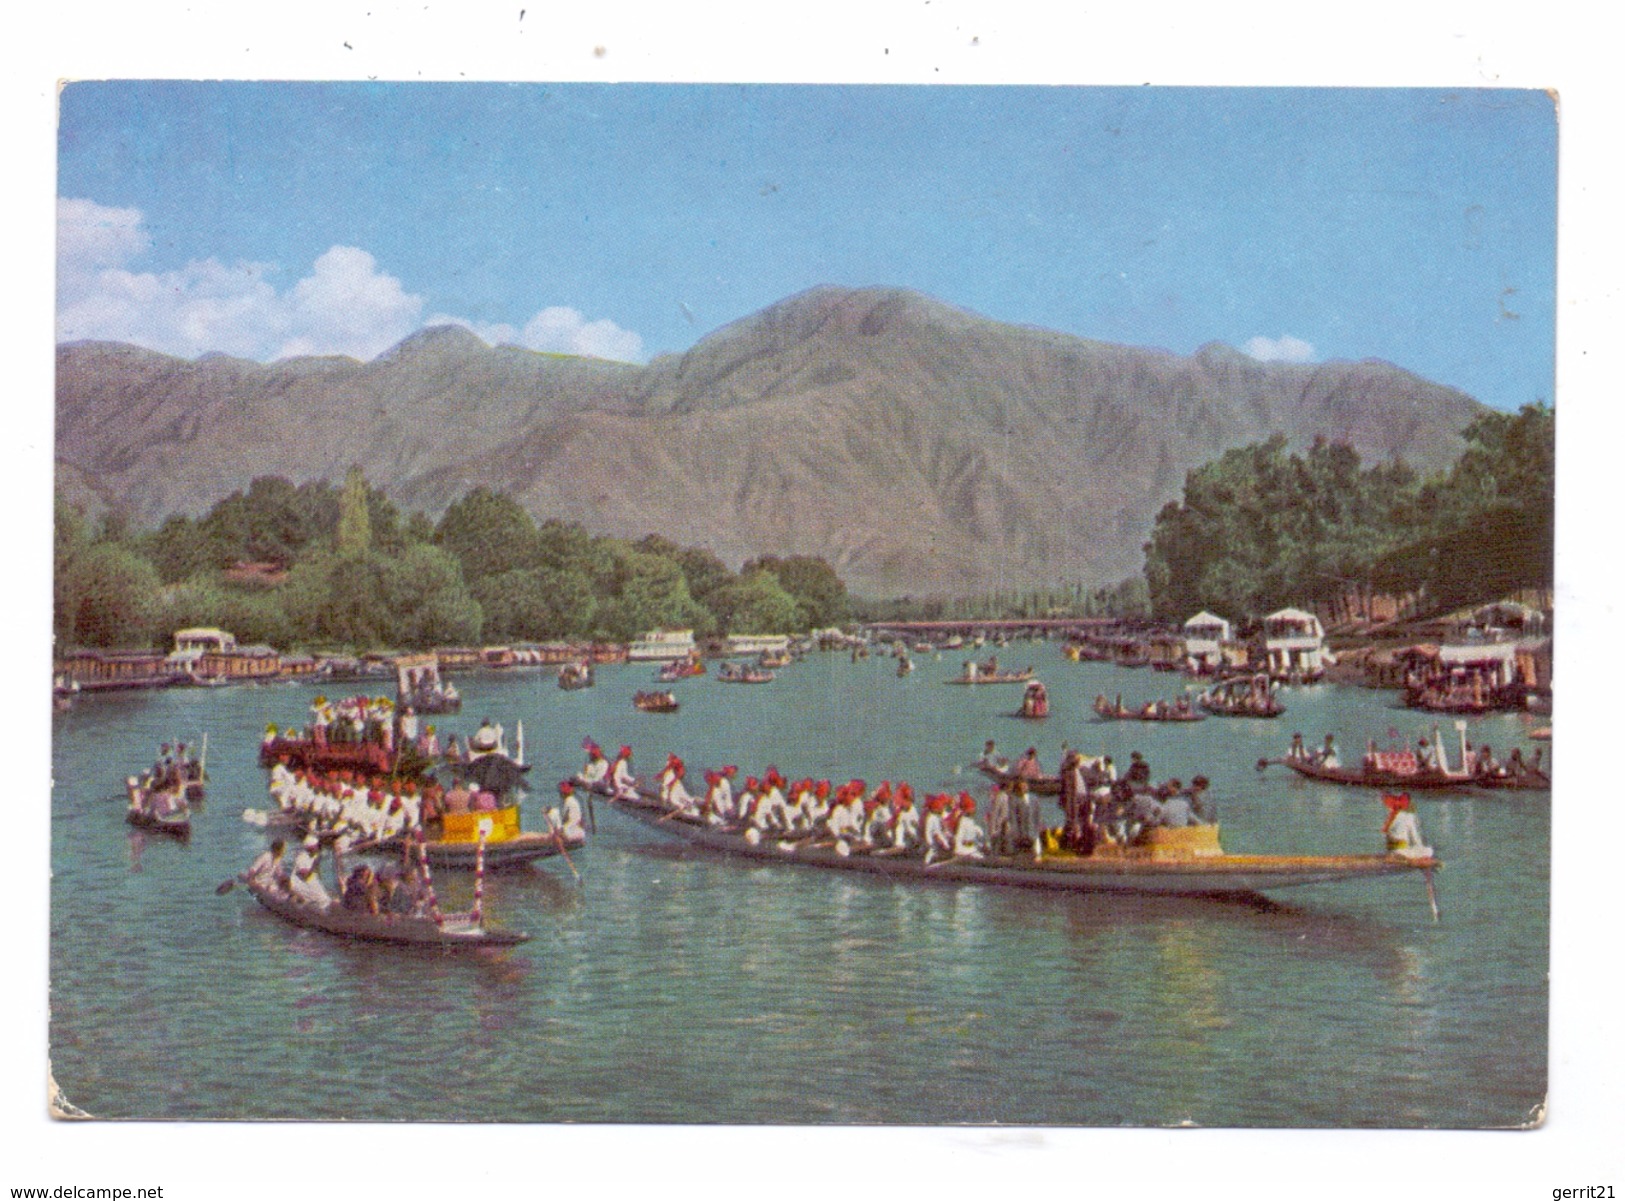 SPORT - RUDERN / Rowing - Regatta, Srinagar, Kashmir / India - Remo